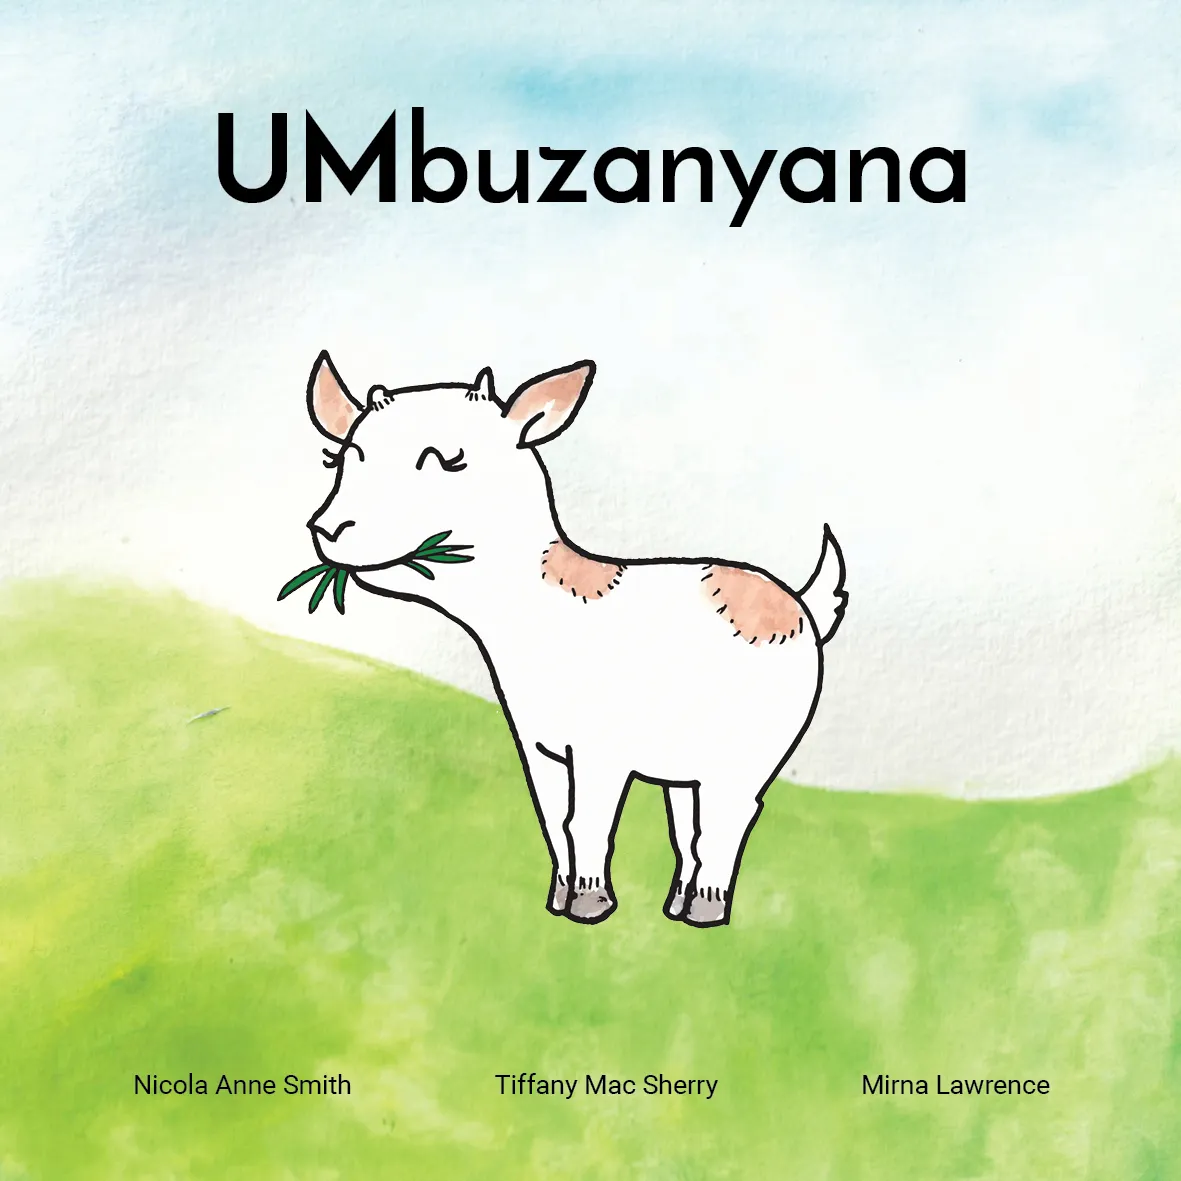 UMbuzanyana